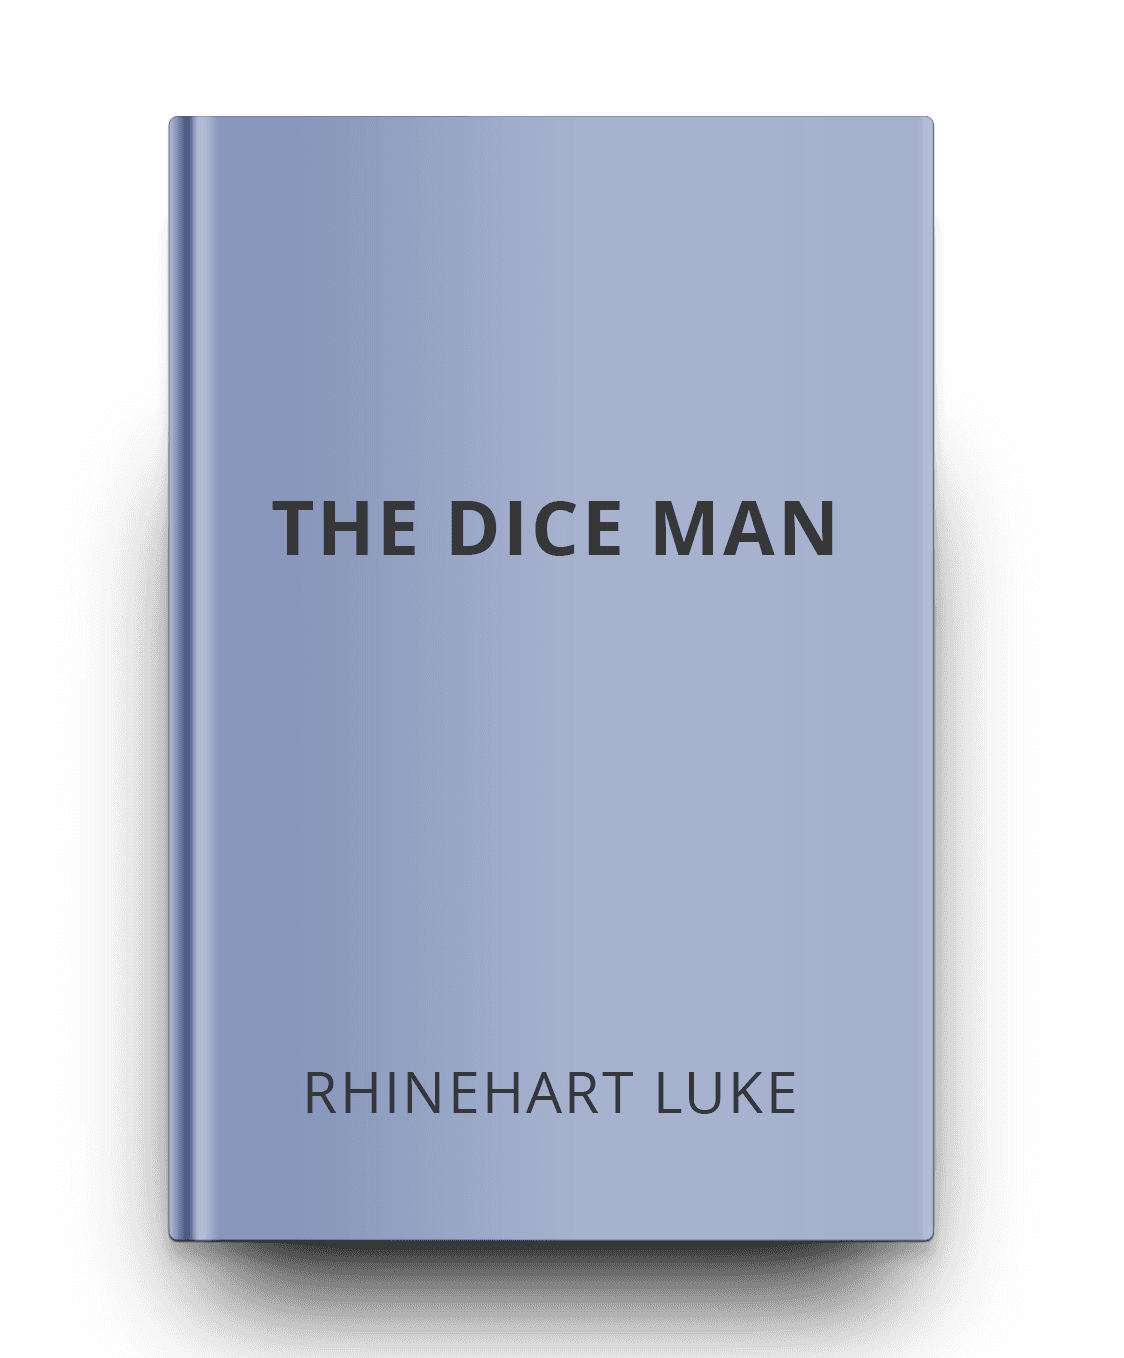 The dice man luke rhinehart pdf